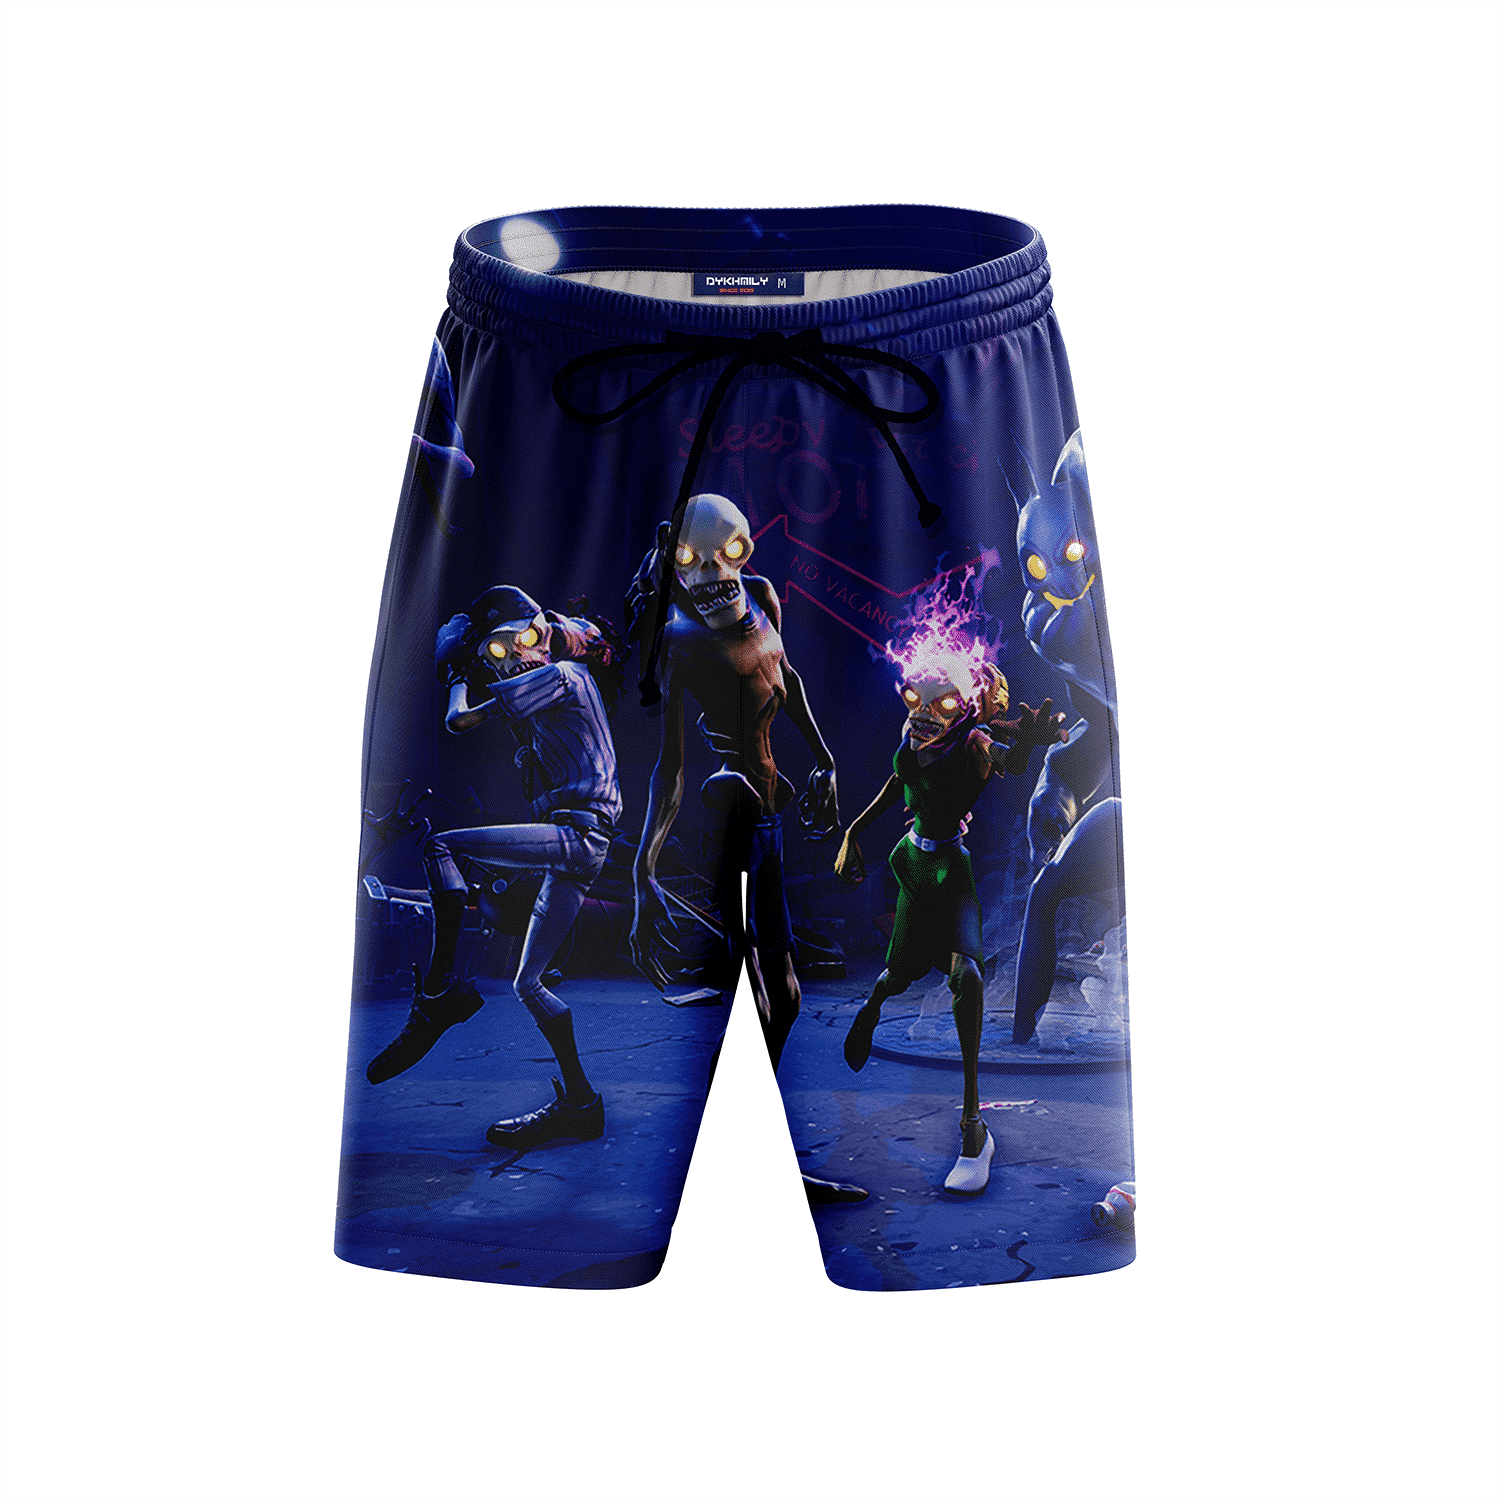  Fortnite Battle Royal Boxer Shorts, Men's Underwear